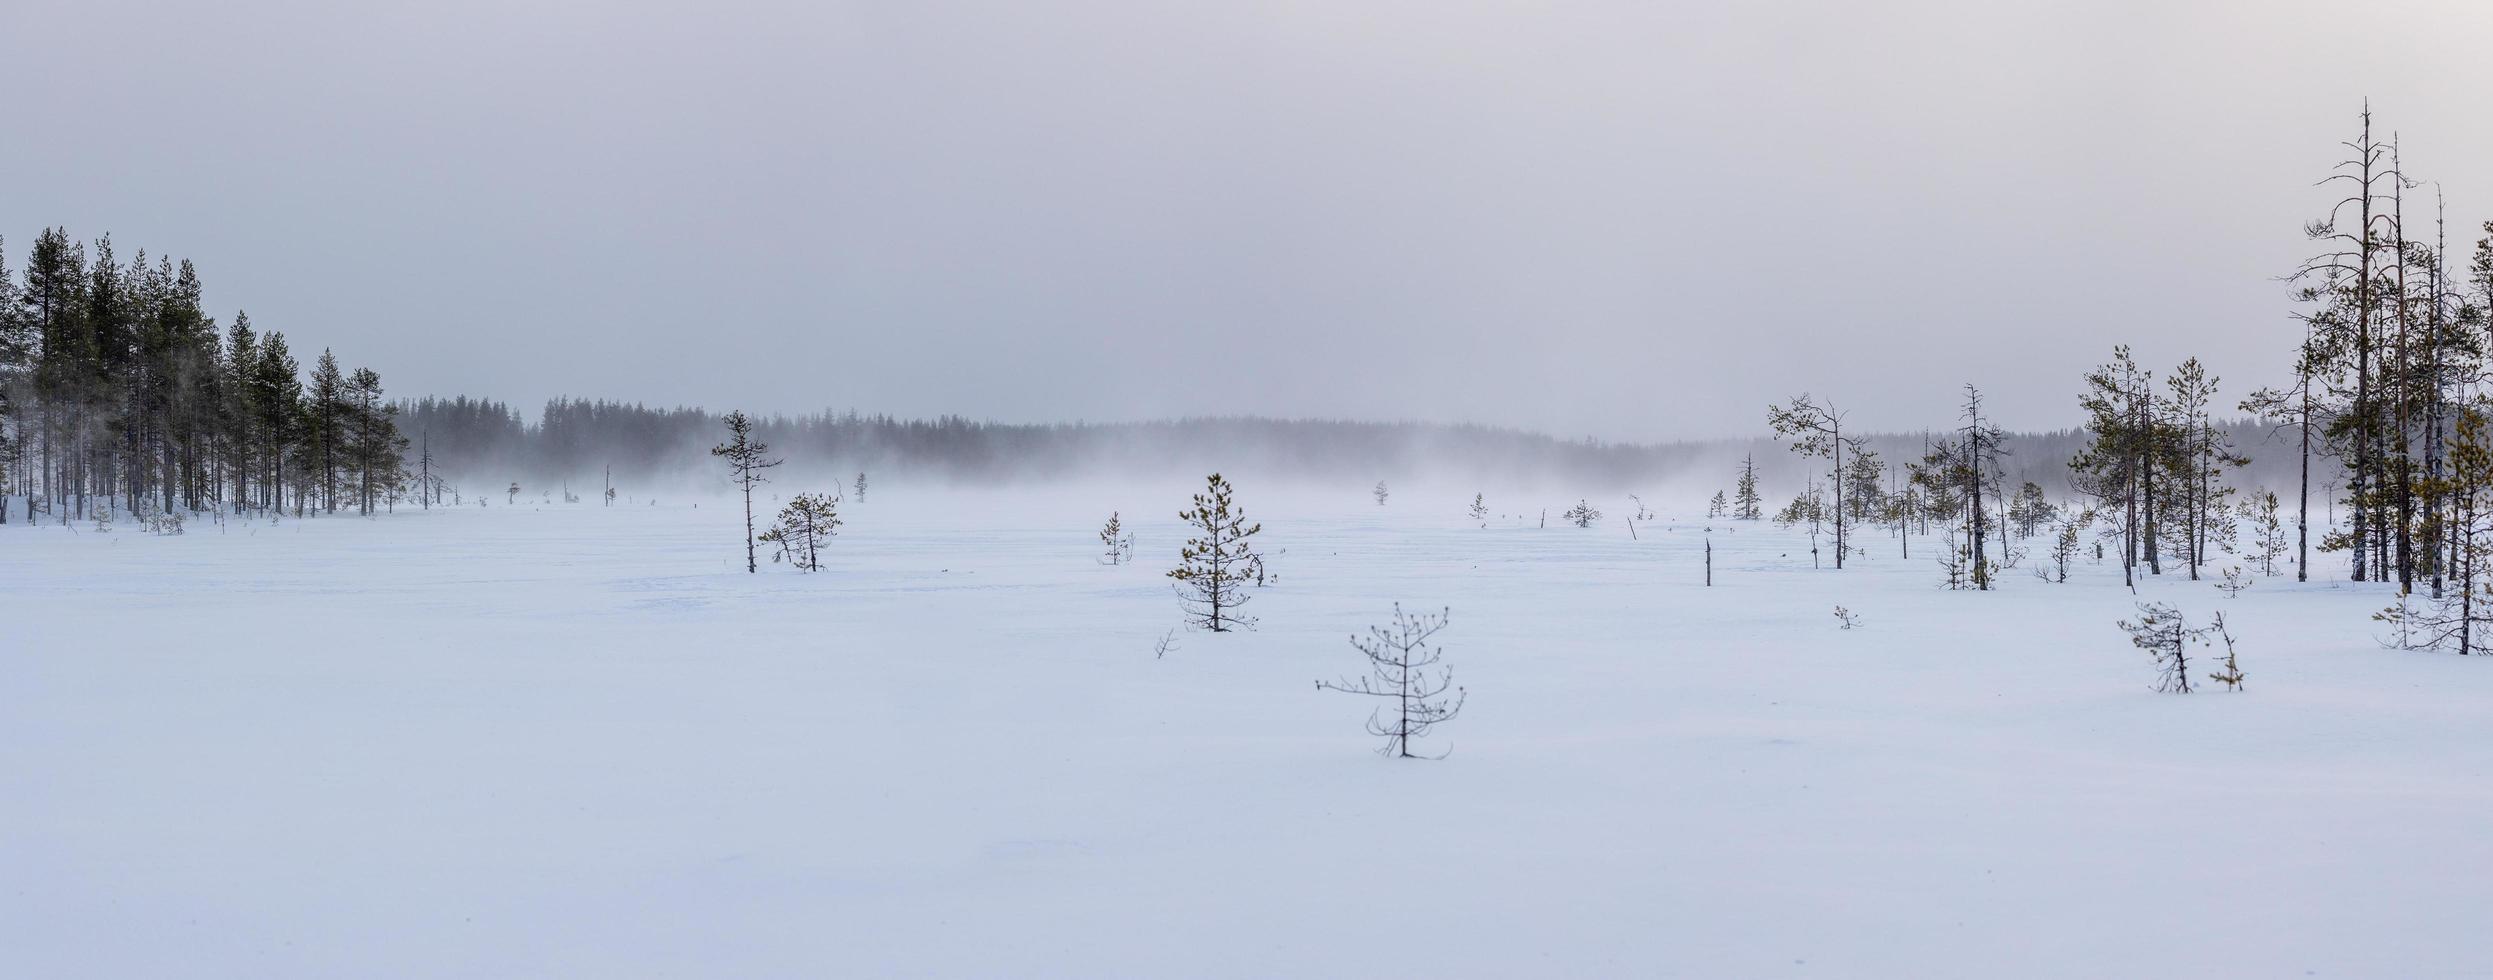 bufera di neve in una palude in inverno in finlandia foto